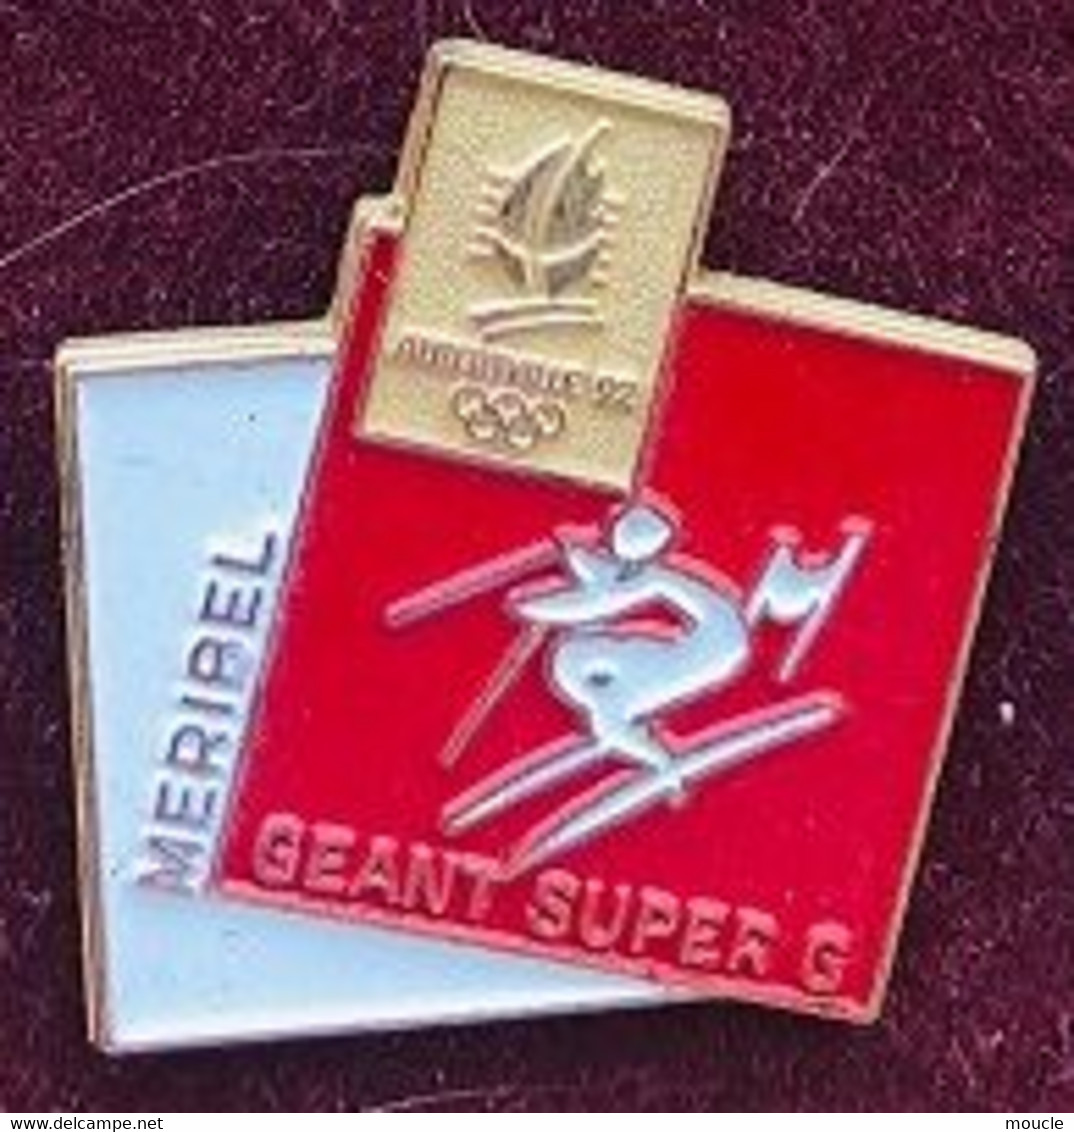 ALBERTVILLE 1992 / 92 - FRANCE - SITE MERIBEL - SKI - SLALOM GEANT - SUPER G - JEUX OLYMPIQUES - SAVOIE - ANNEAUX - (JO) - Olympische Spiele